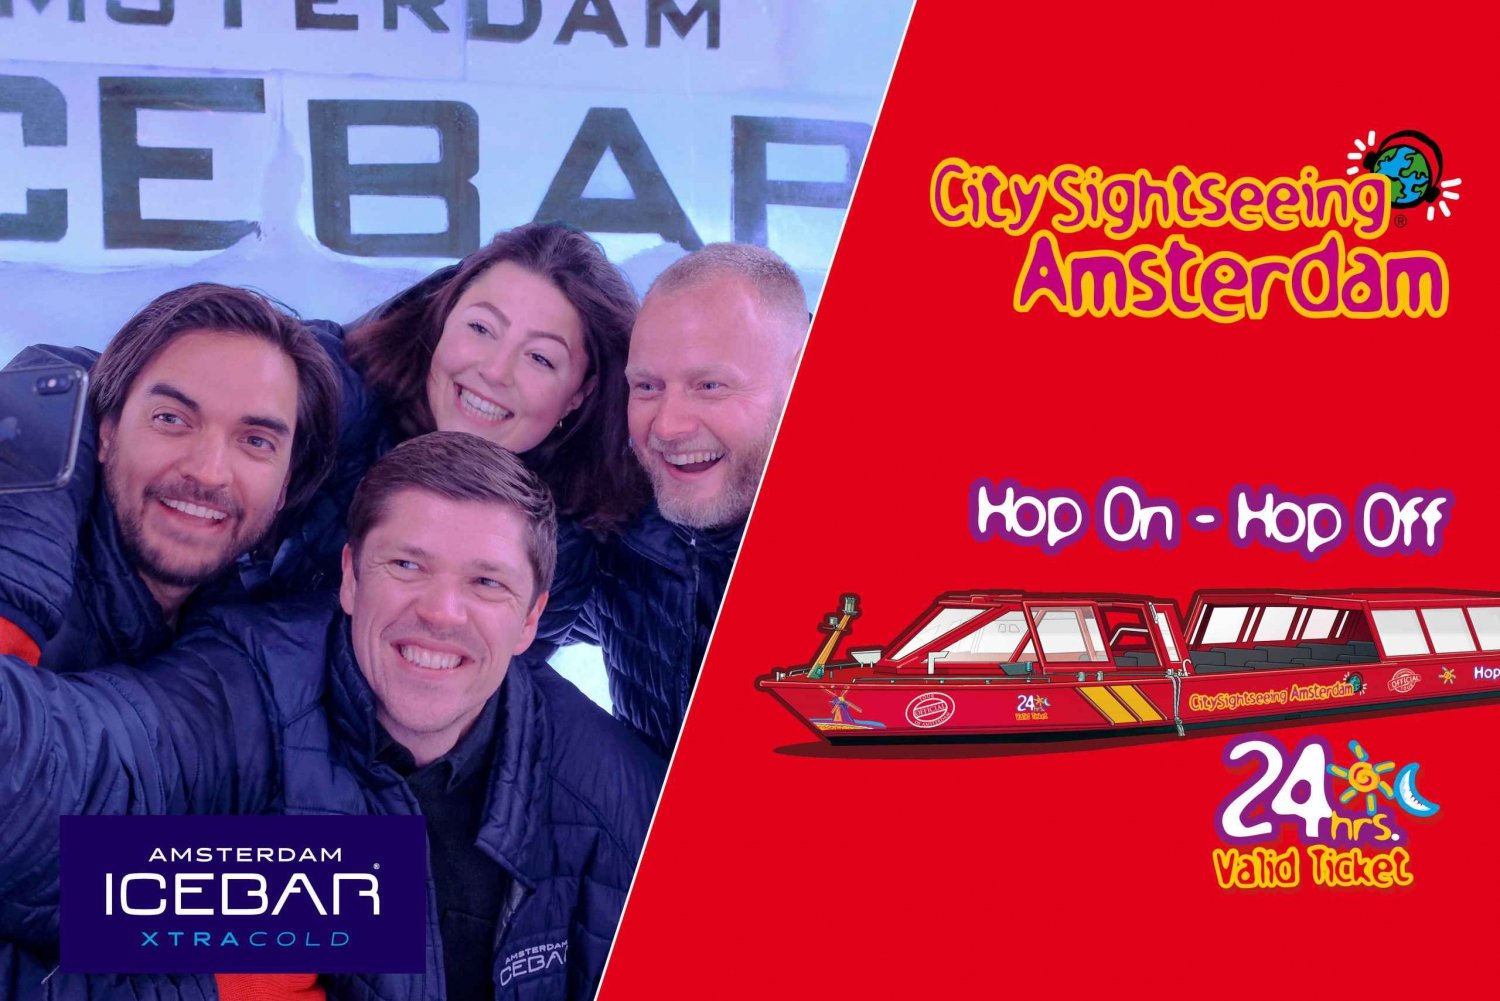 Amsterdam: 24-godzinna usługa Hop-On Hop-Off Boat i XtraCold Icebar